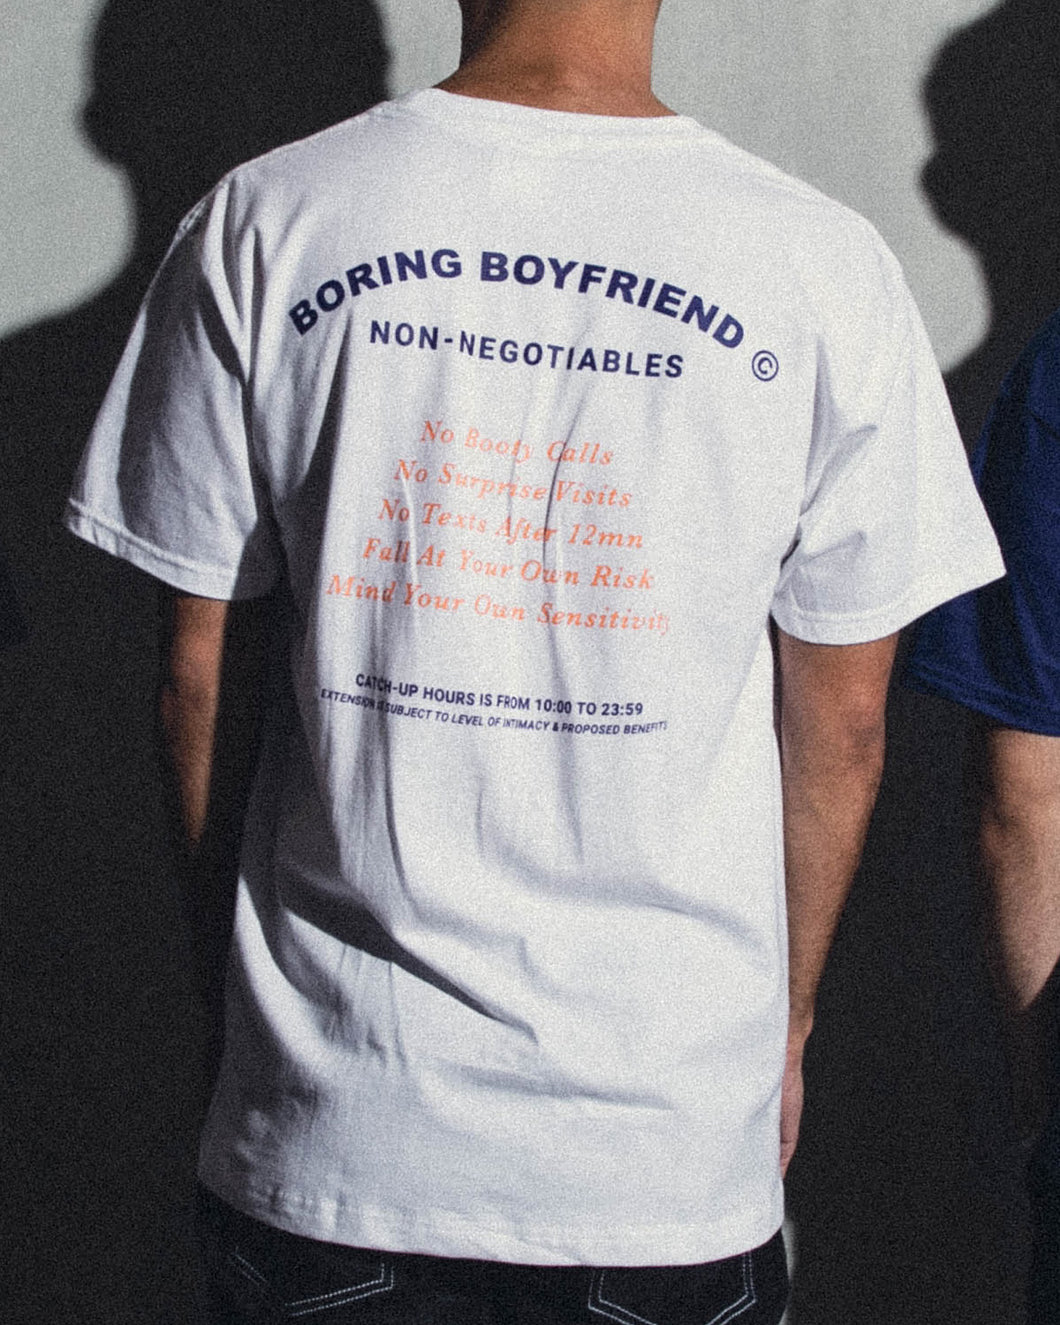 Non-Negotiables Boyfriend Shirt in White